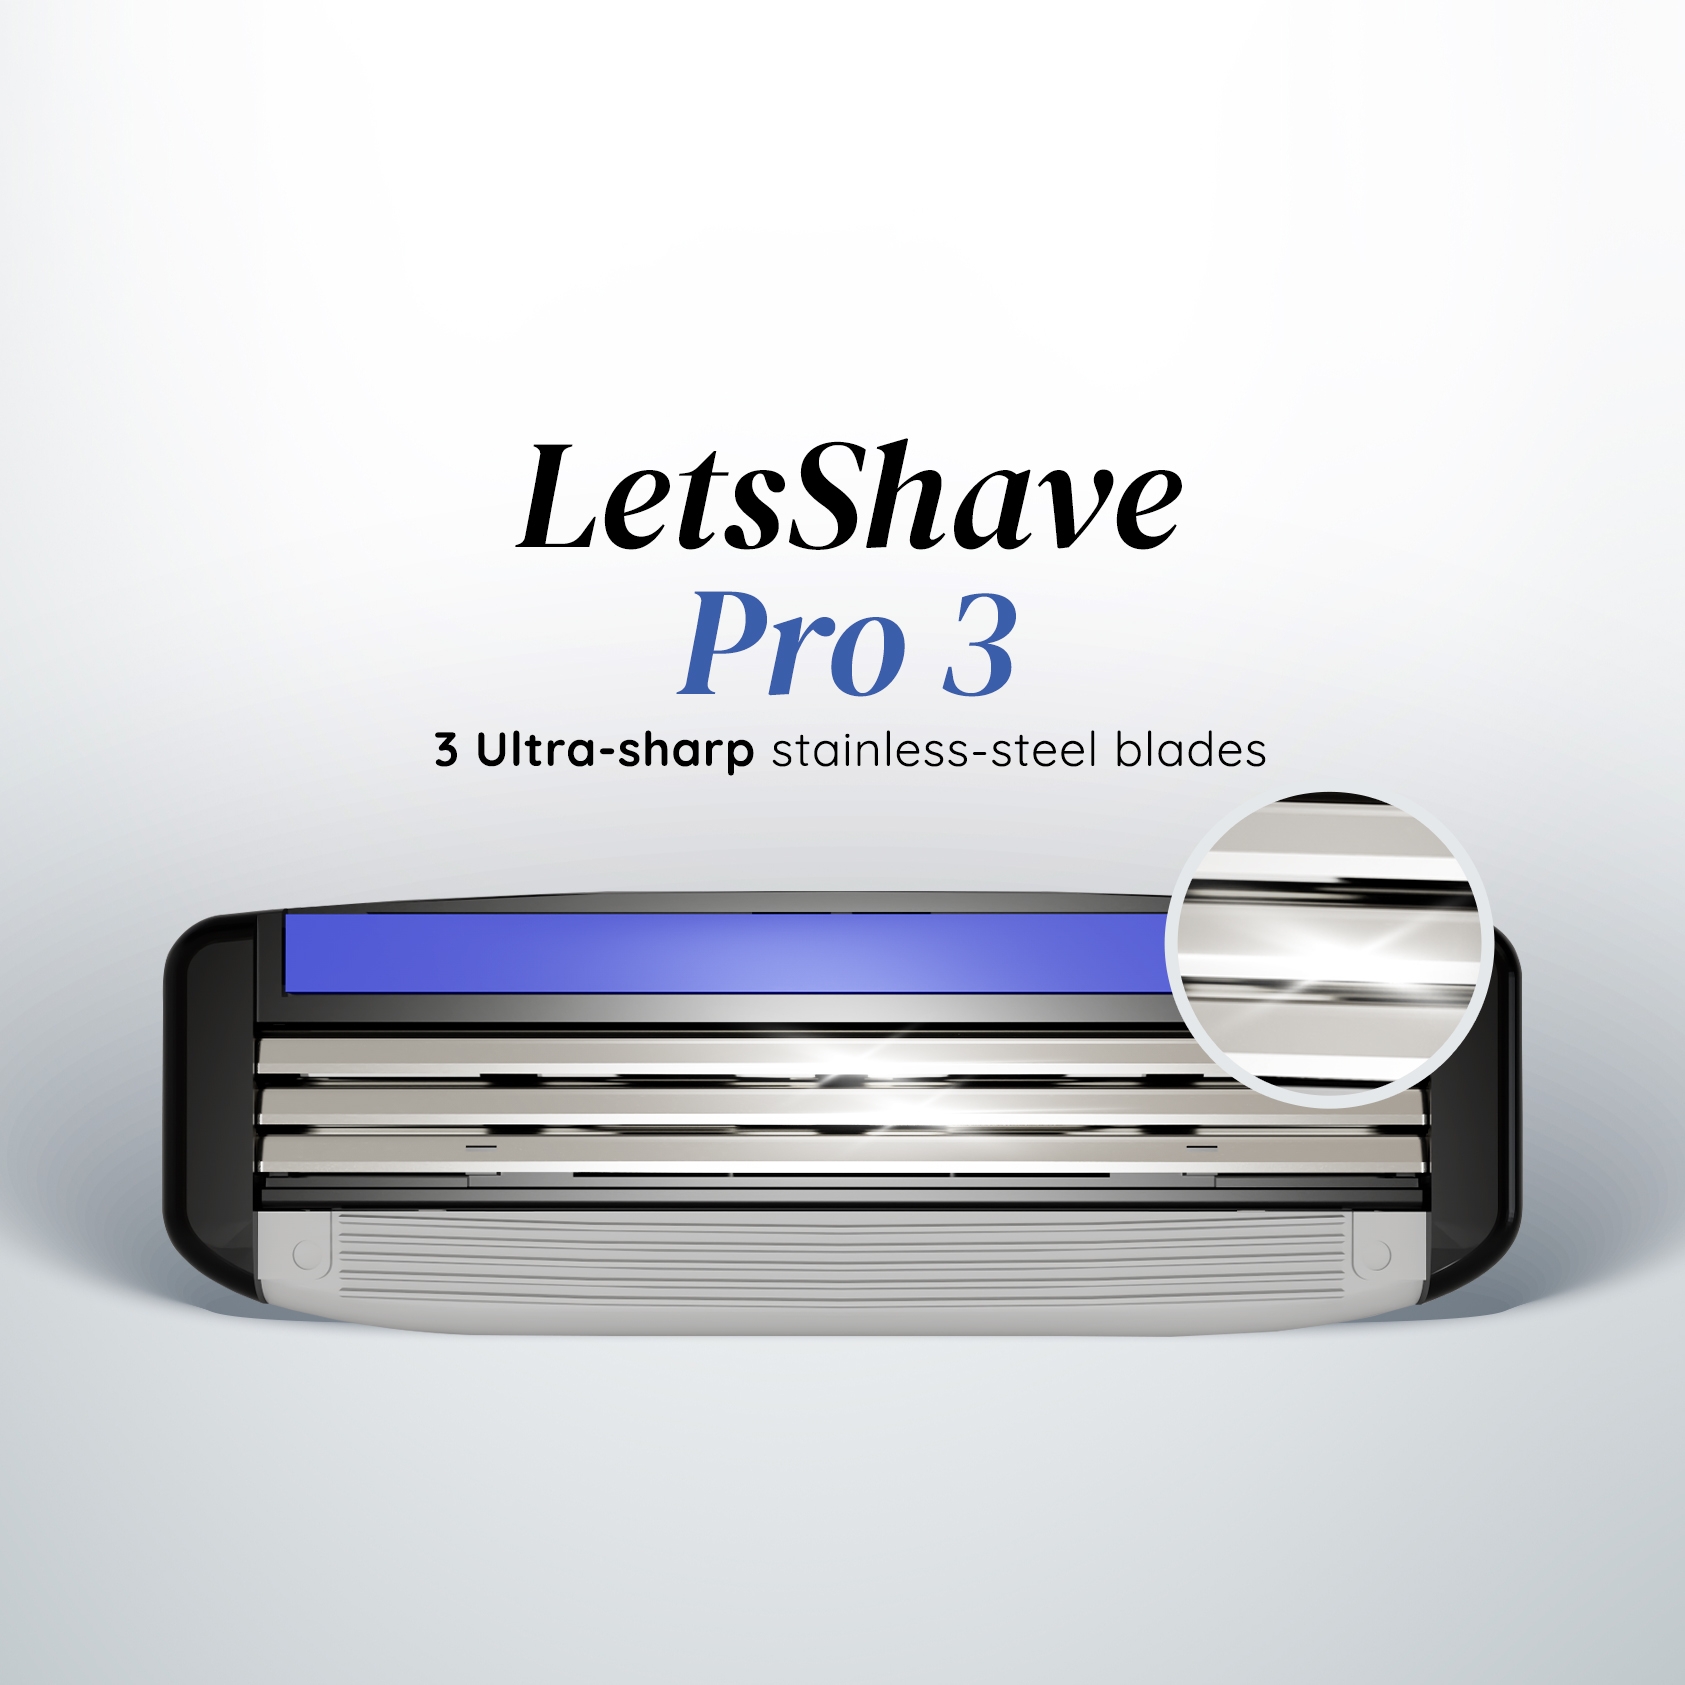 LetsShave Pro 3 Shaving Blades - Pack of 4 Razor Blades